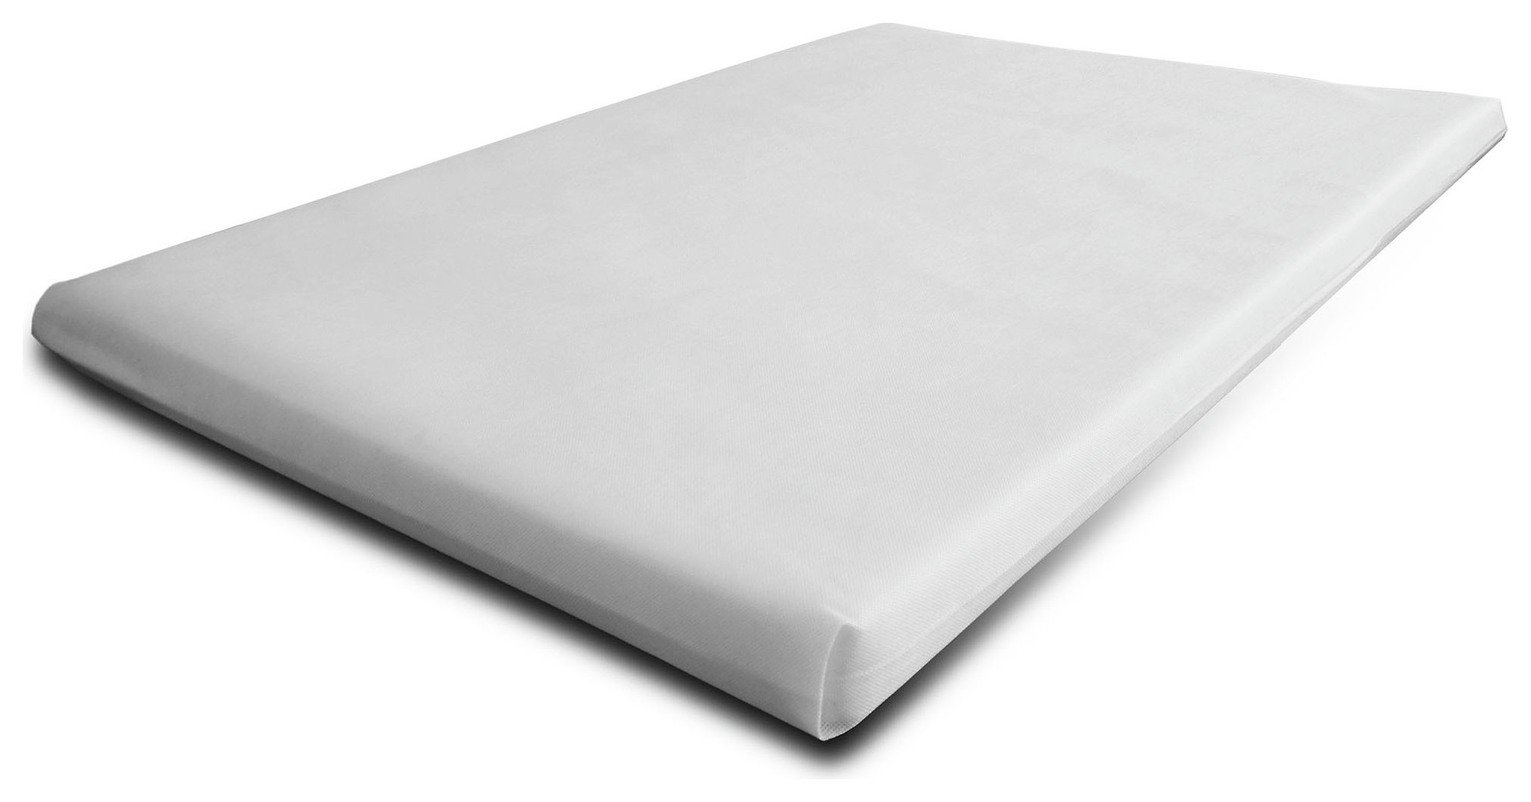 thick travel cot mattress